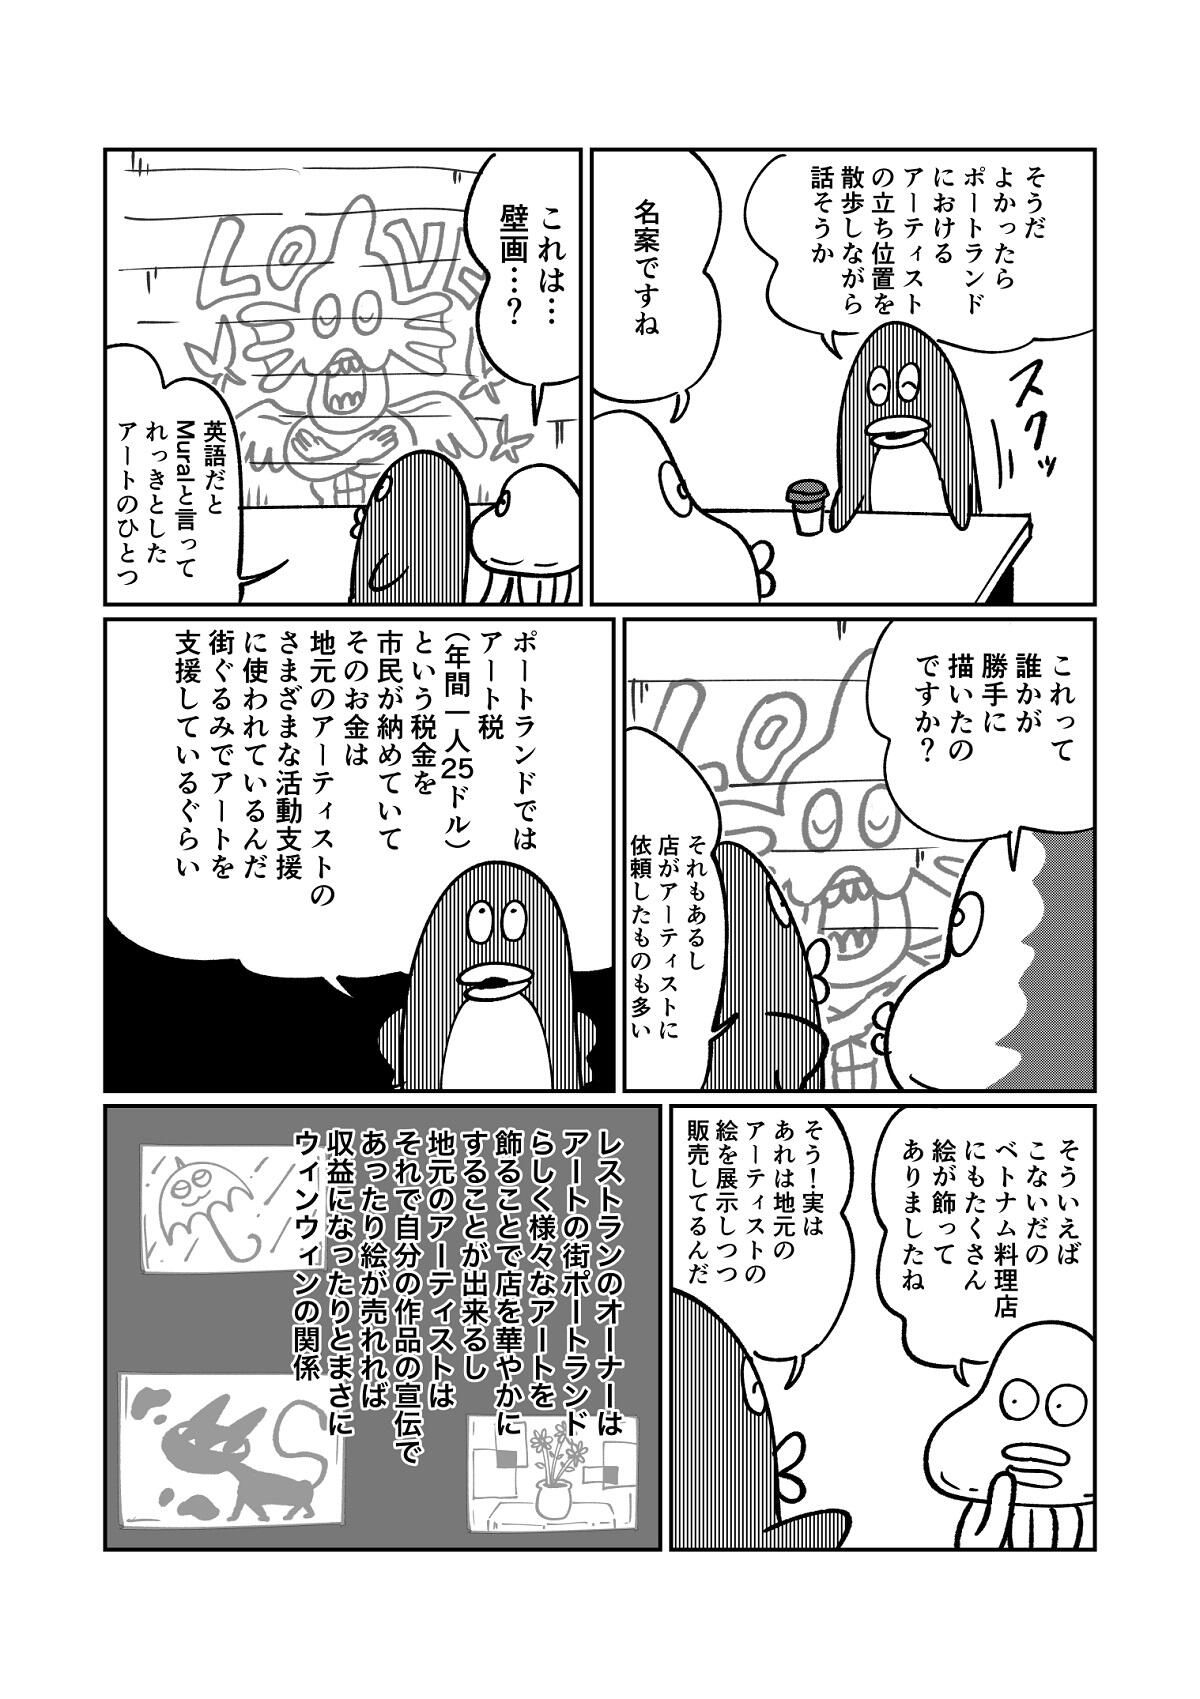 https://www.ryugaku.co.jp/column/images/jawamura12_5_1200.jpg